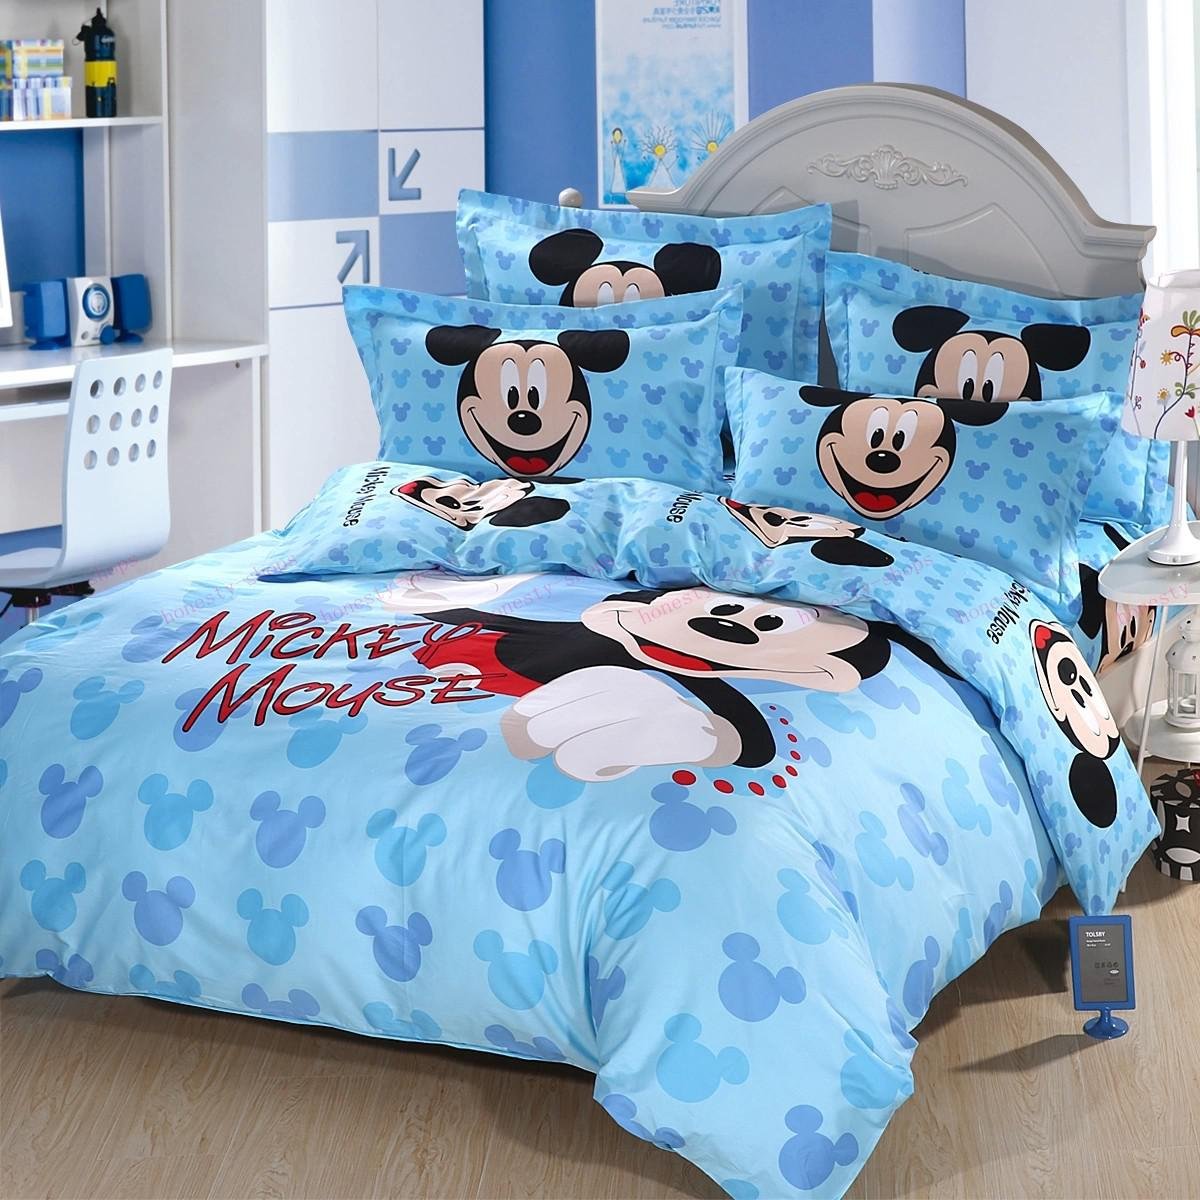 Nice Ideas Minnie Mouse Queen Bedding â All King Bed